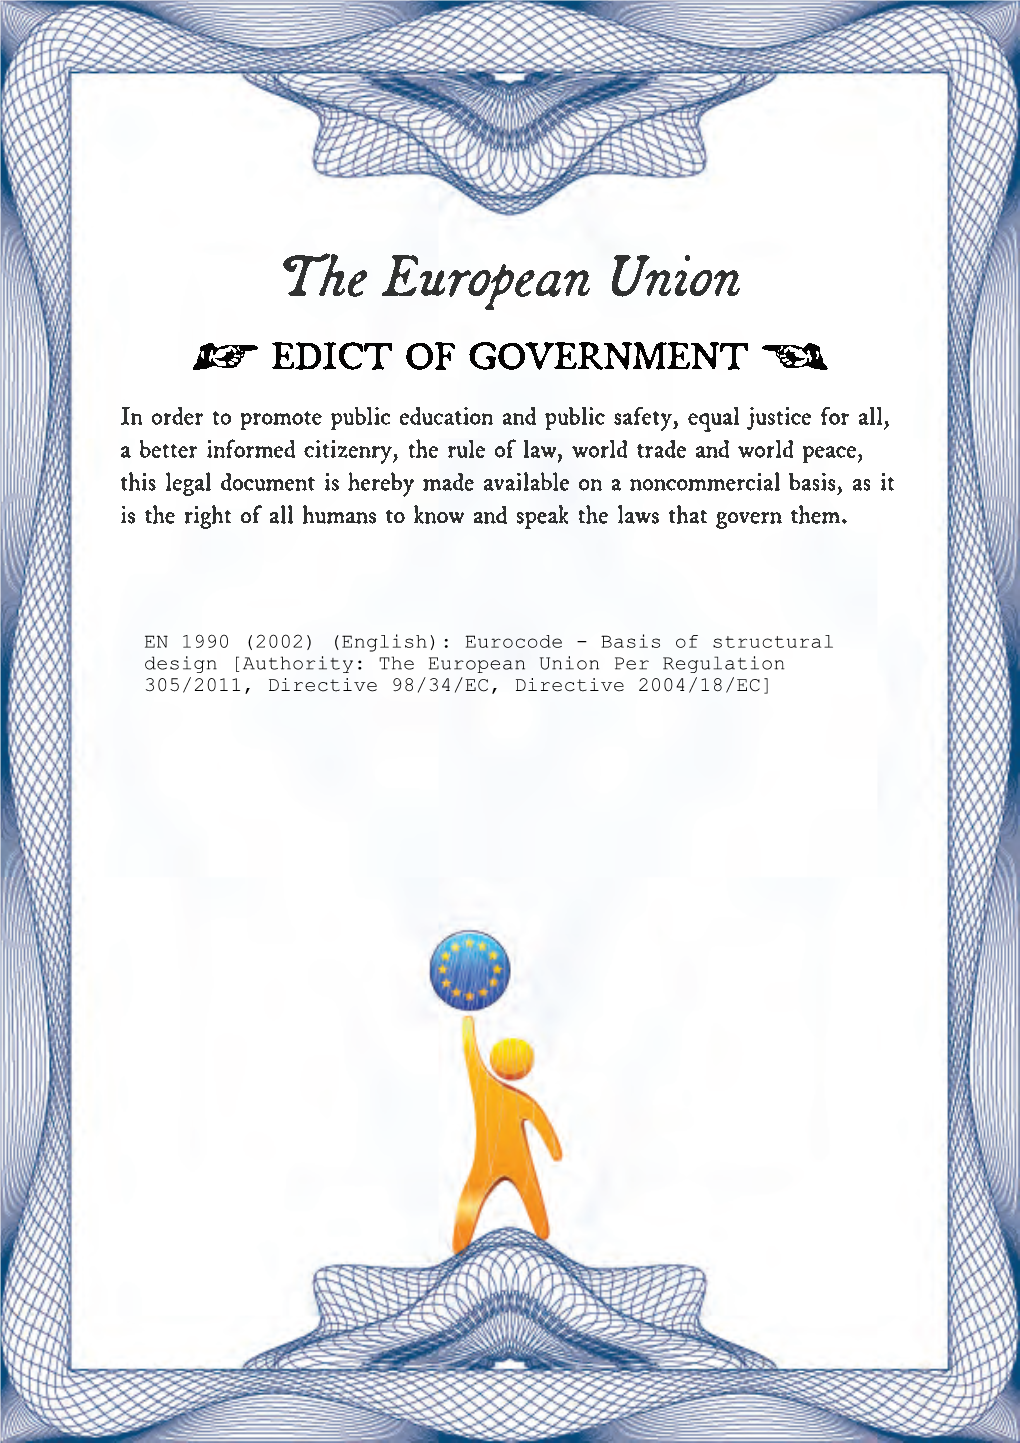 EN 1990: Eurocode